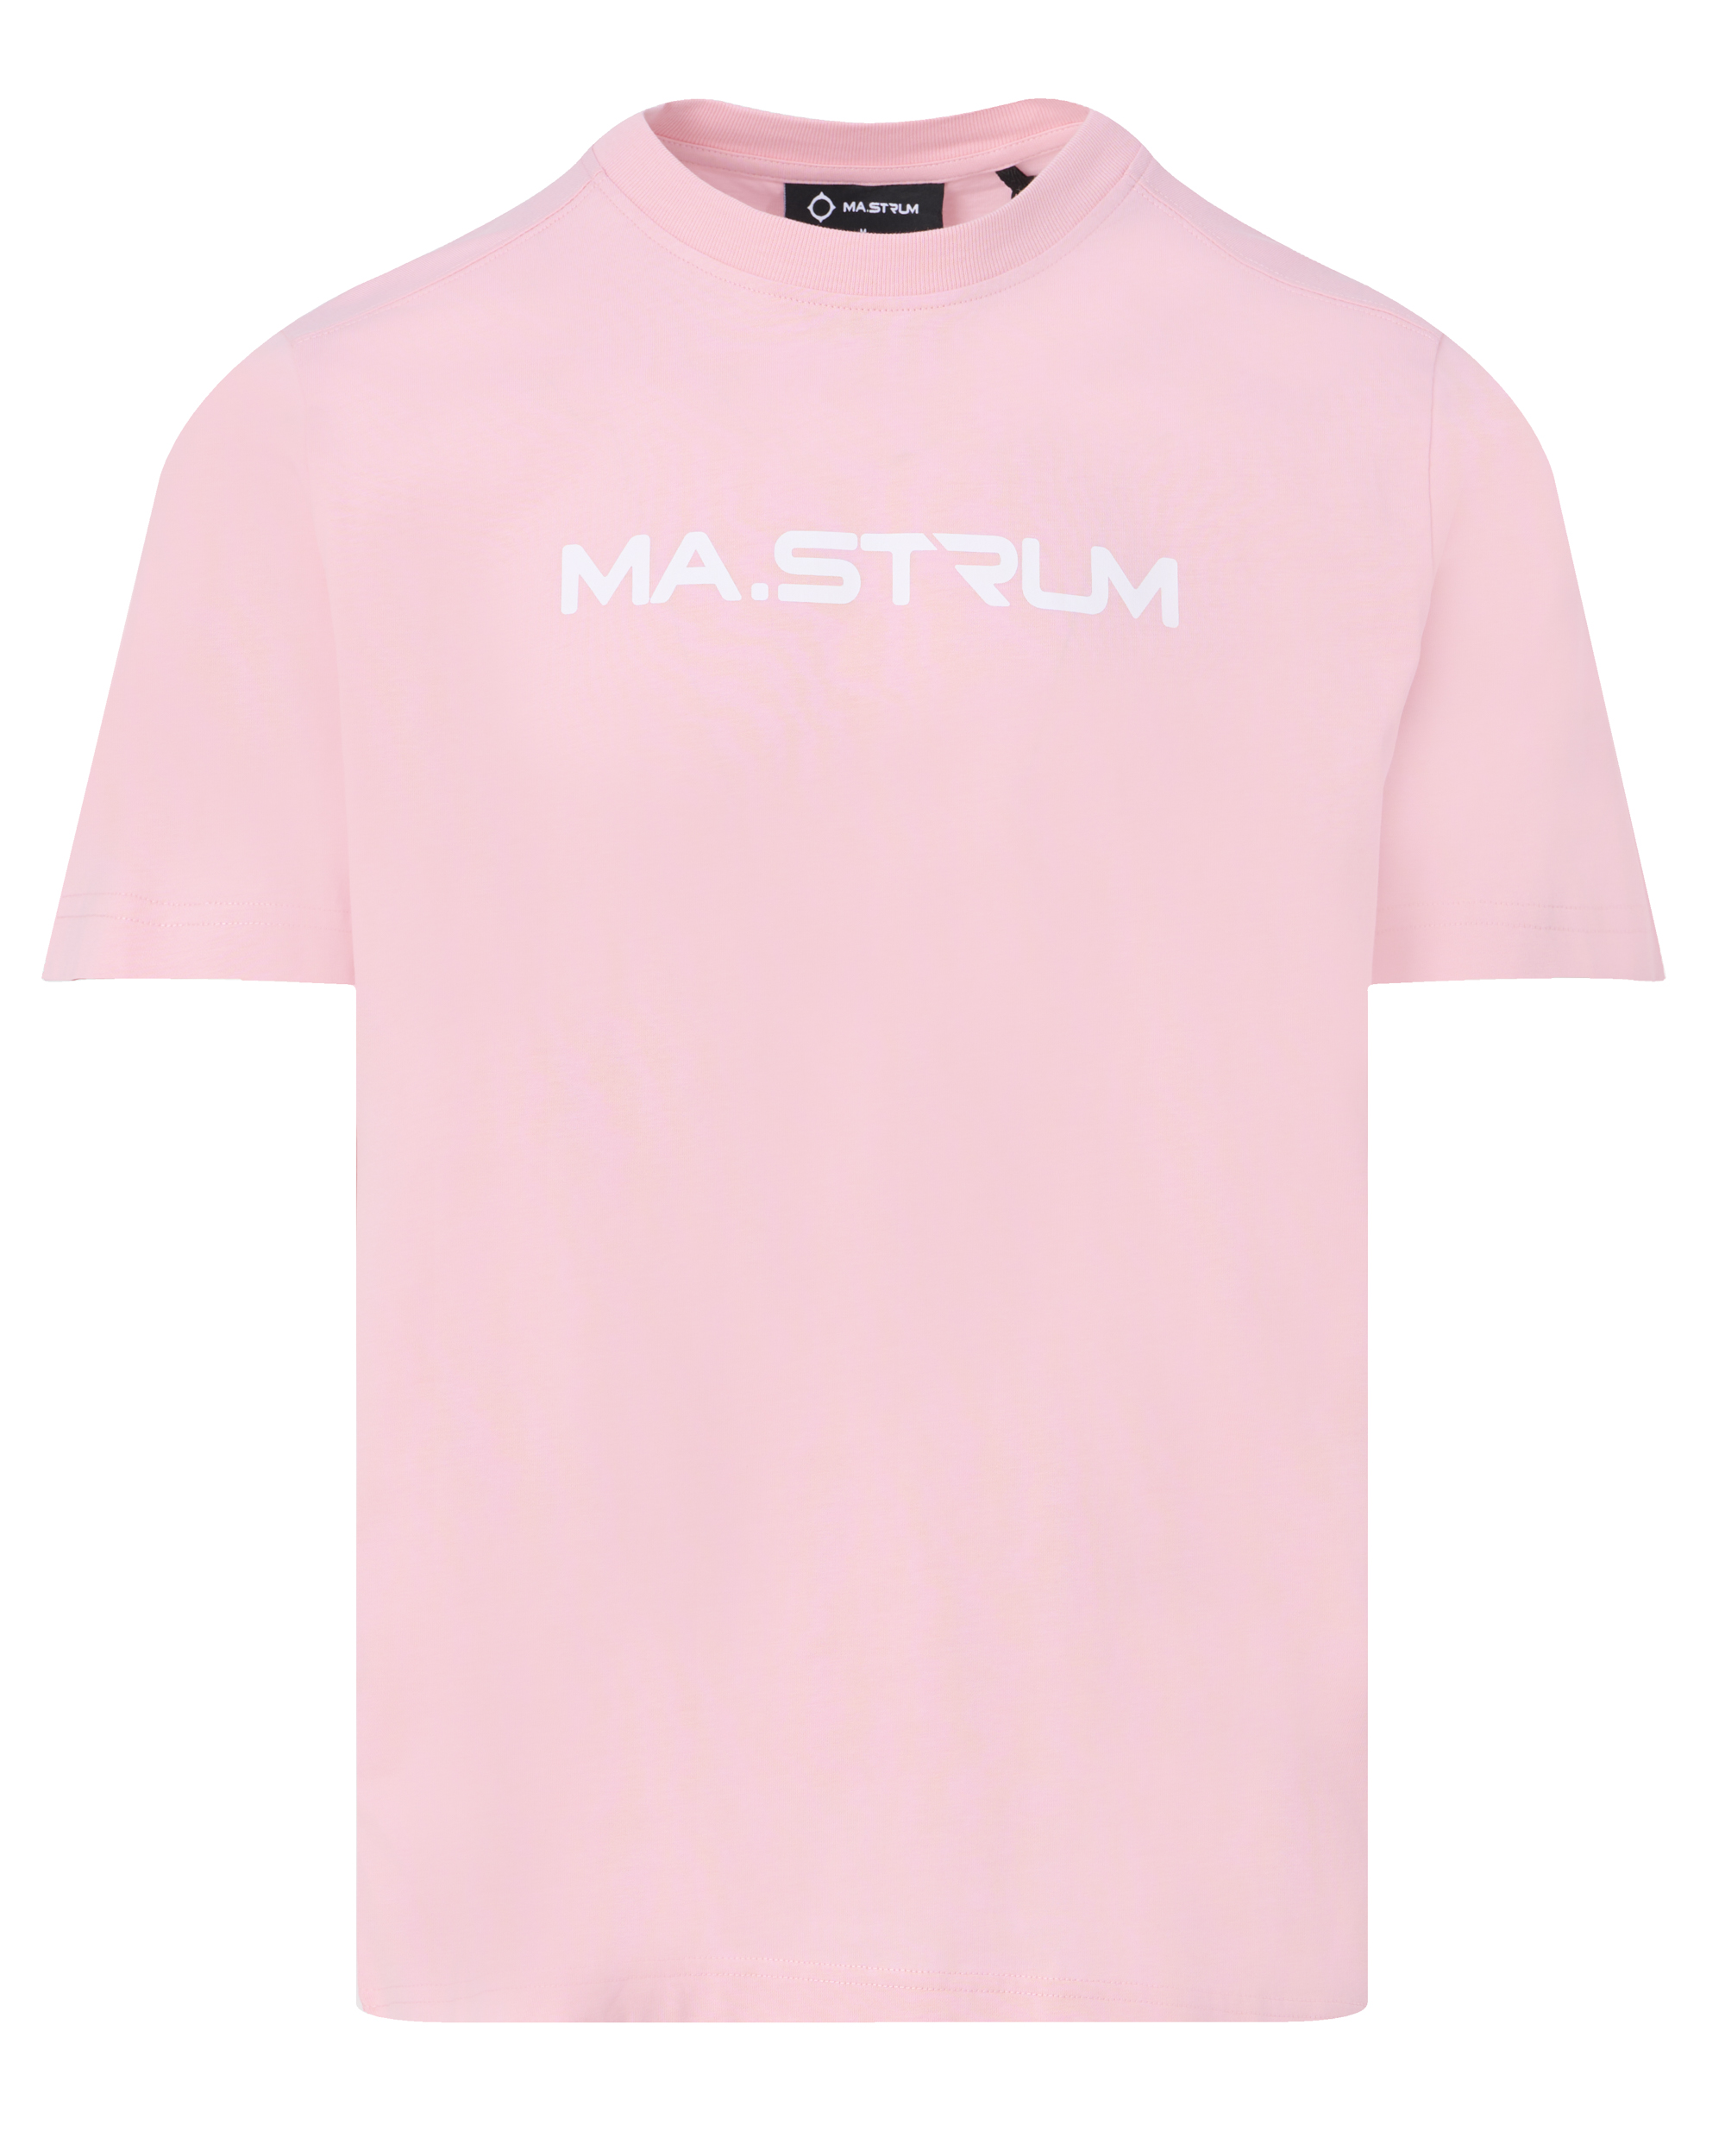 Ma.strum Heren T-shirt KM